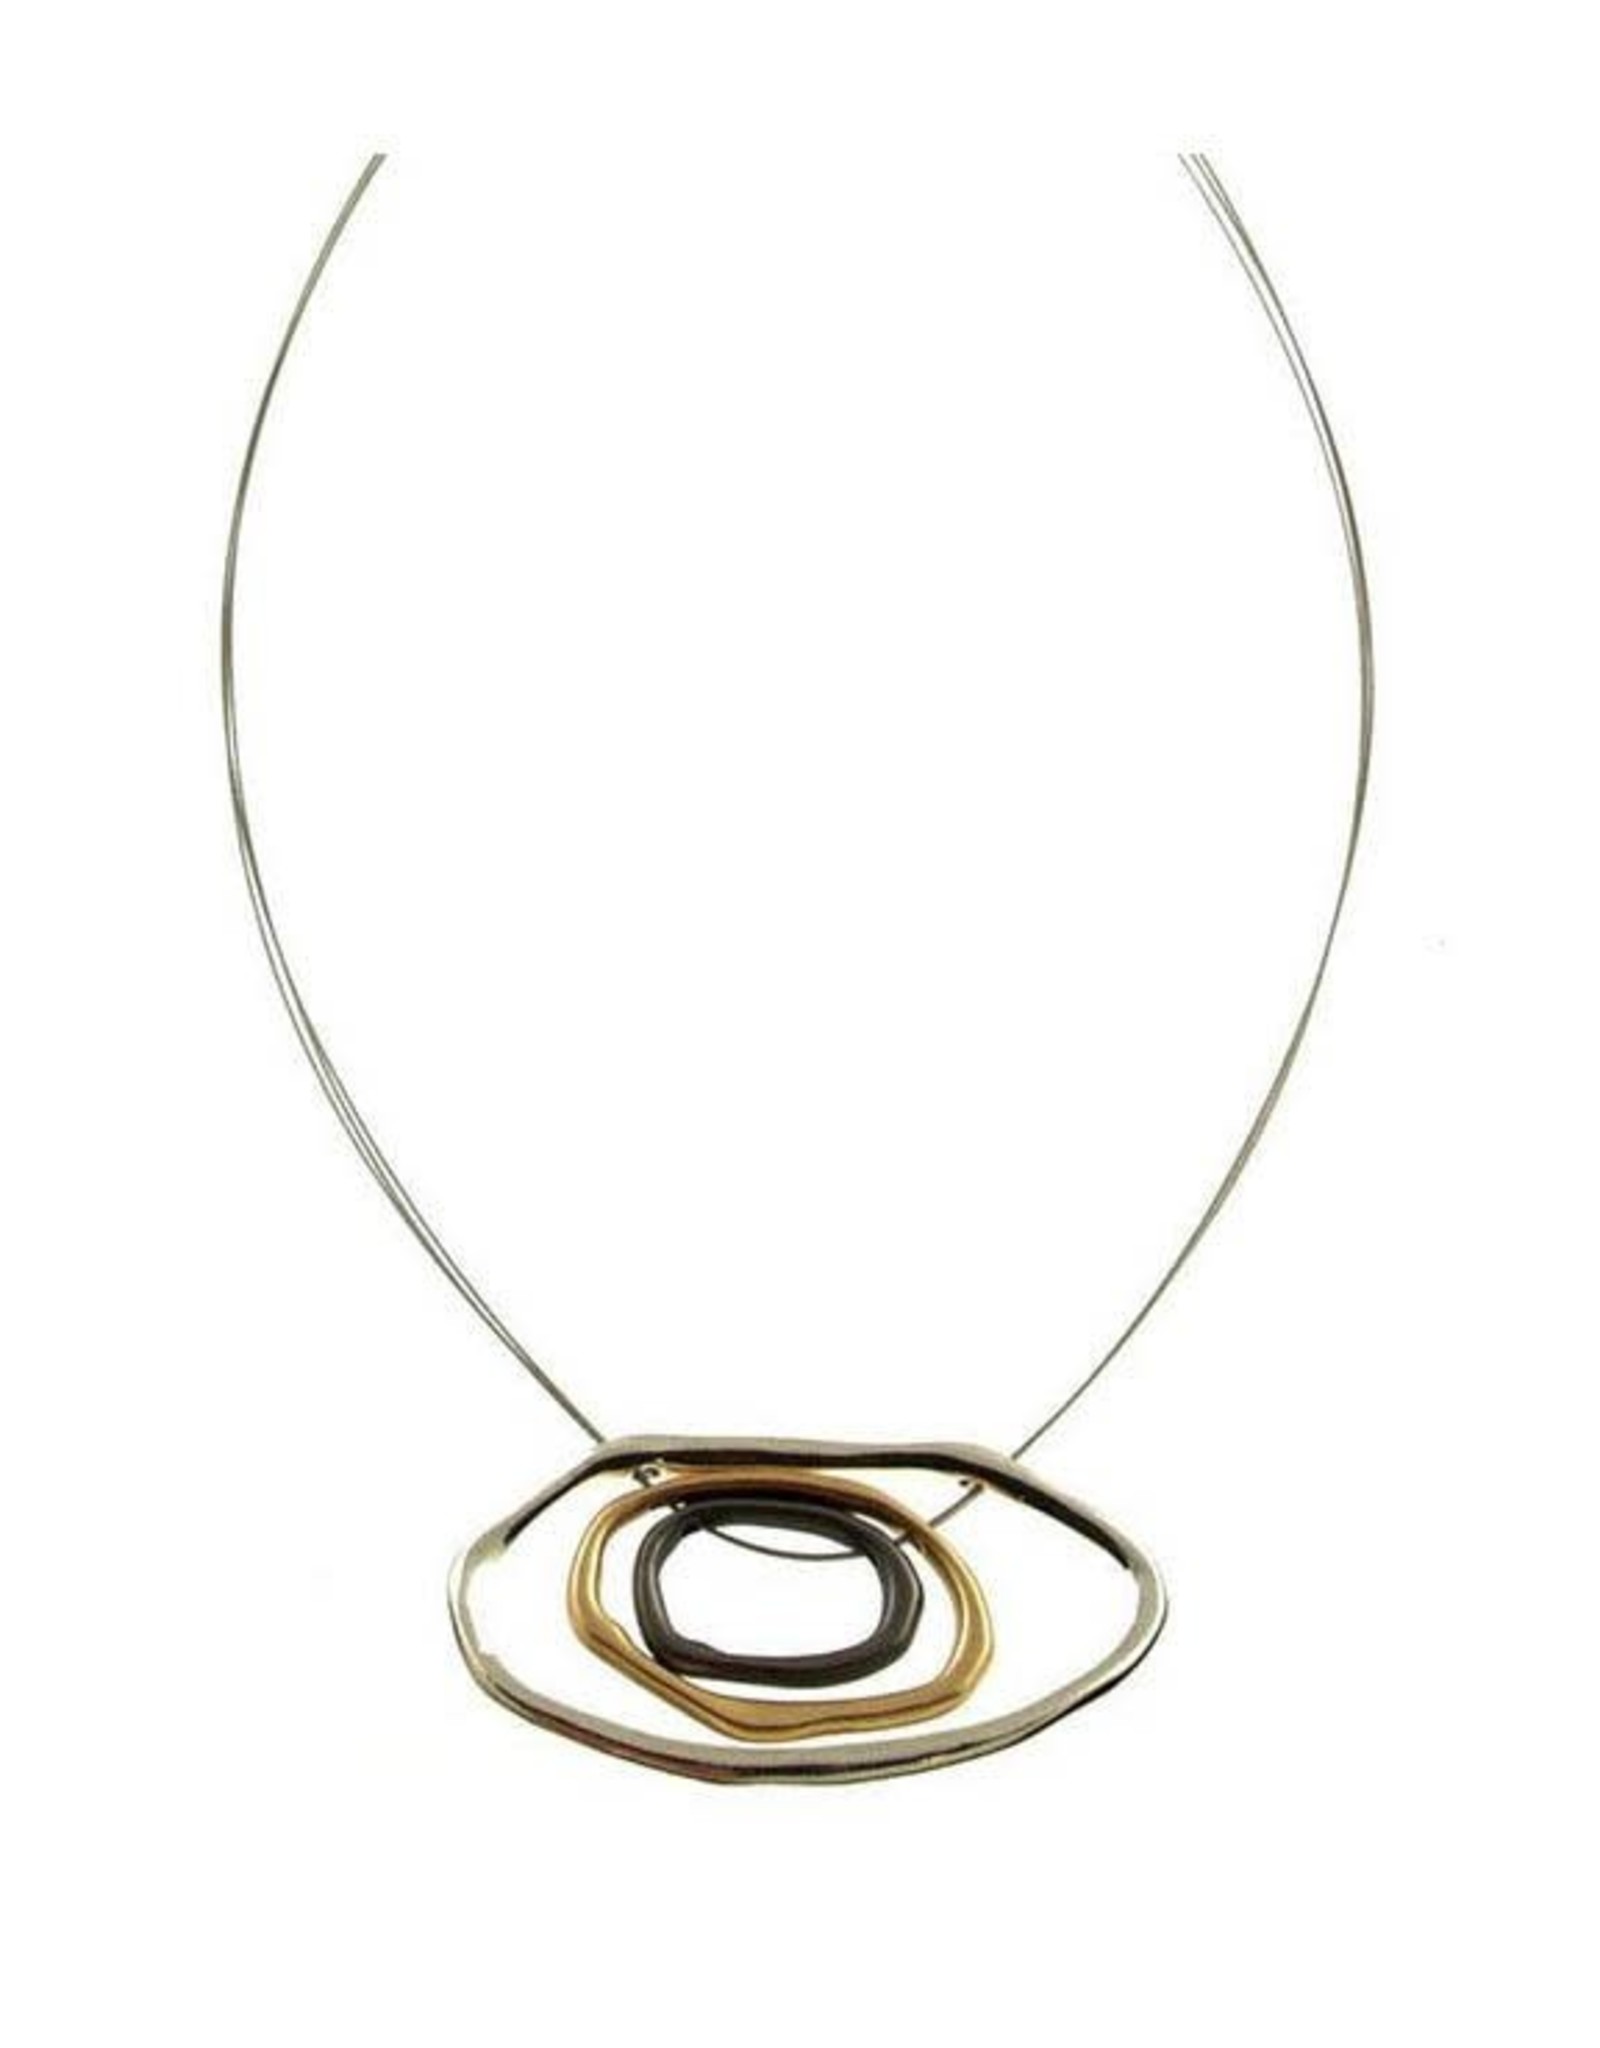 ORIGIN Abstract cIrcles Necklace